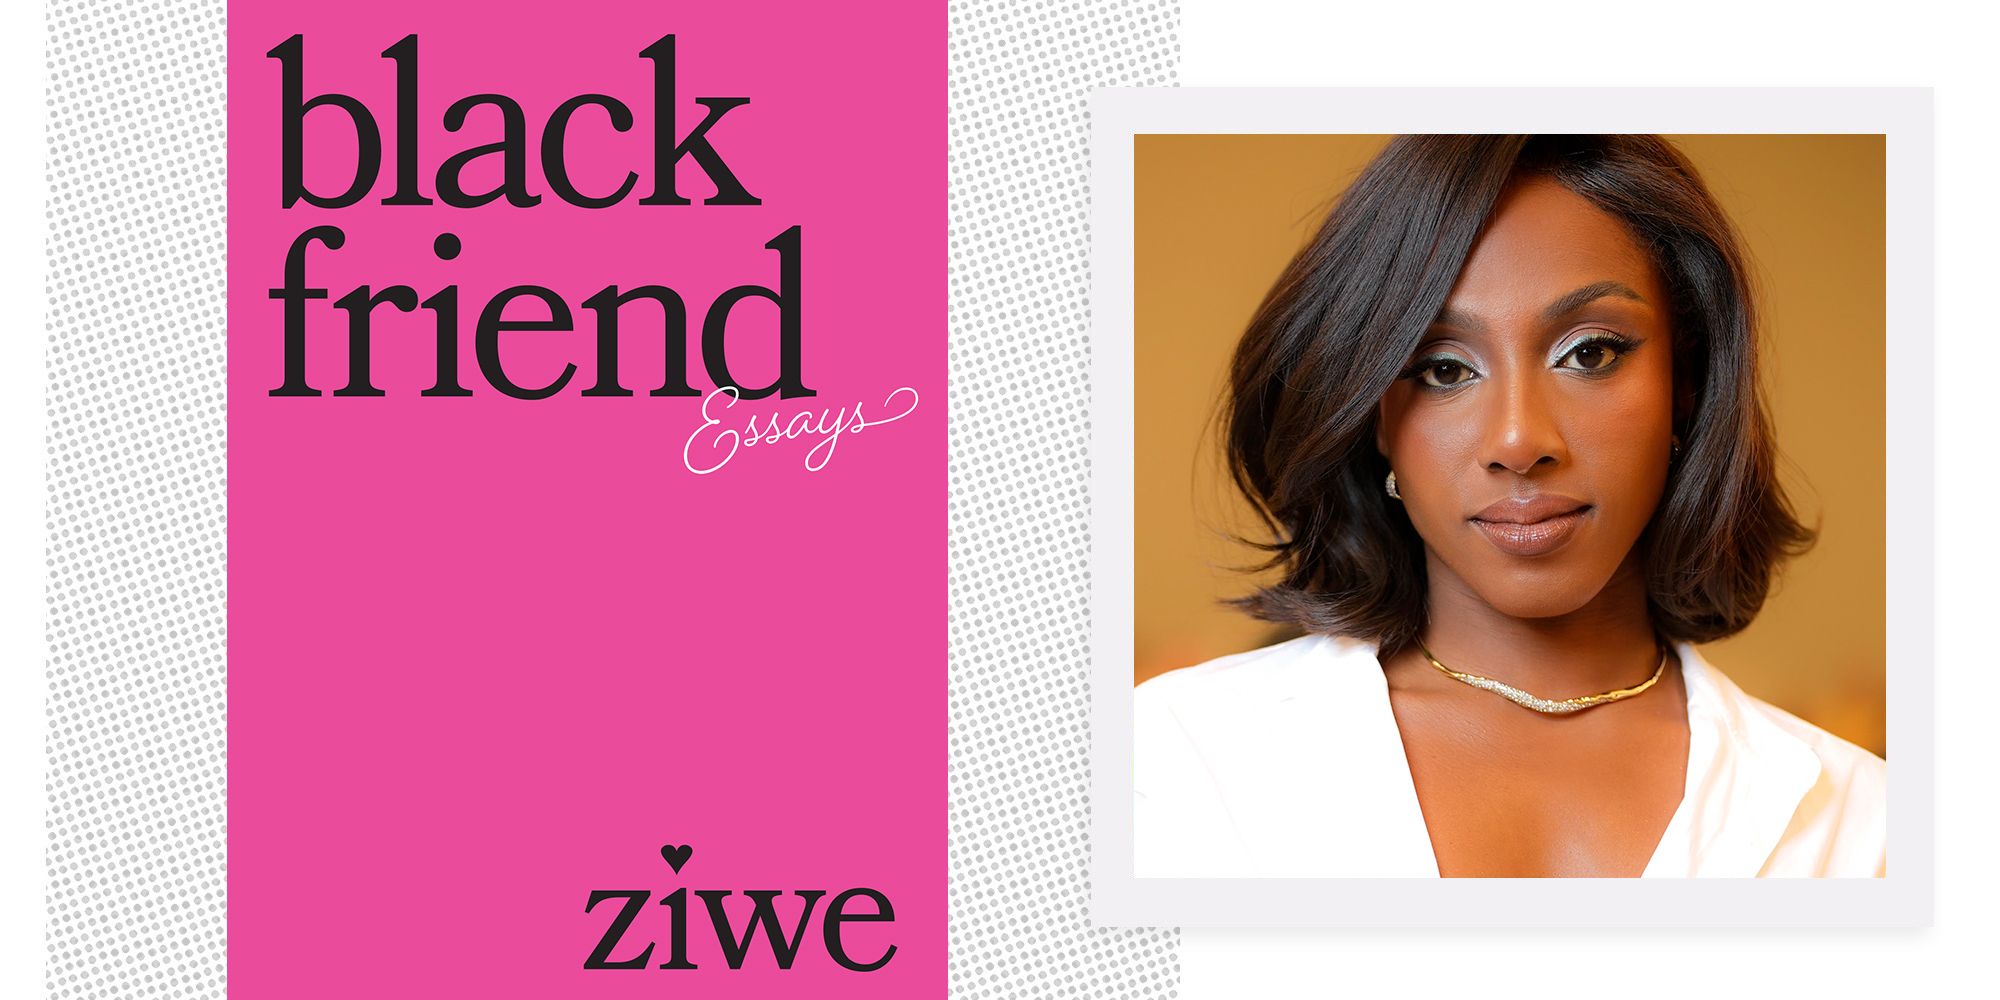 Black Friend: Essays by Ziwe